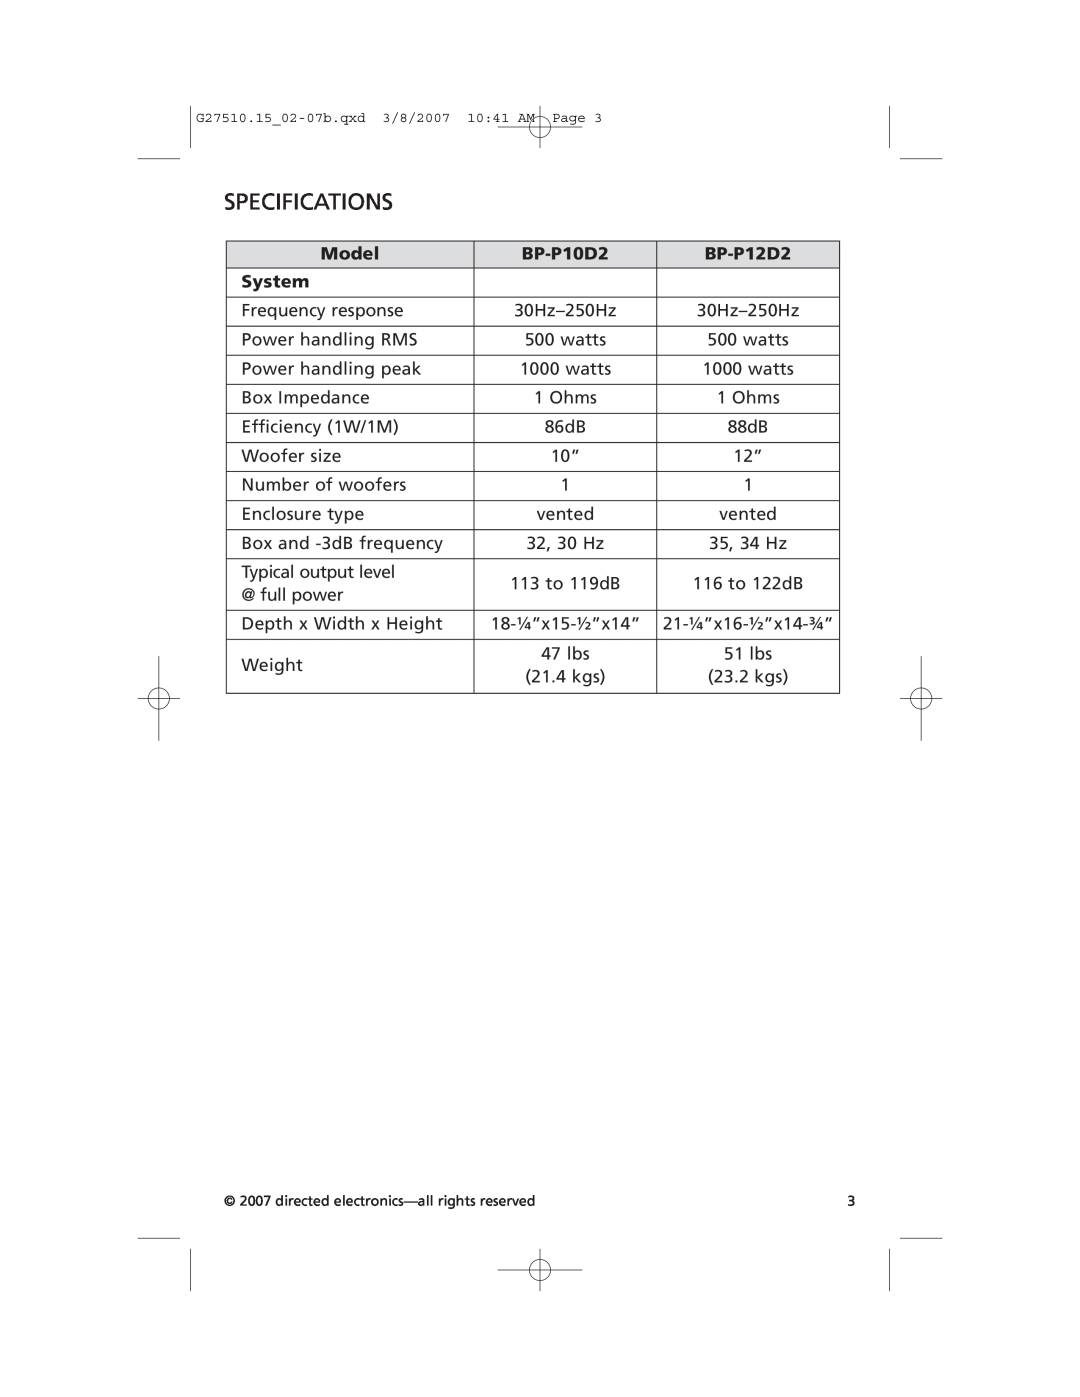 Orion BP-HP12D2, BP-HP10D2 manual Specifications, Model, BP-P10D2, BP-P12D2, System 